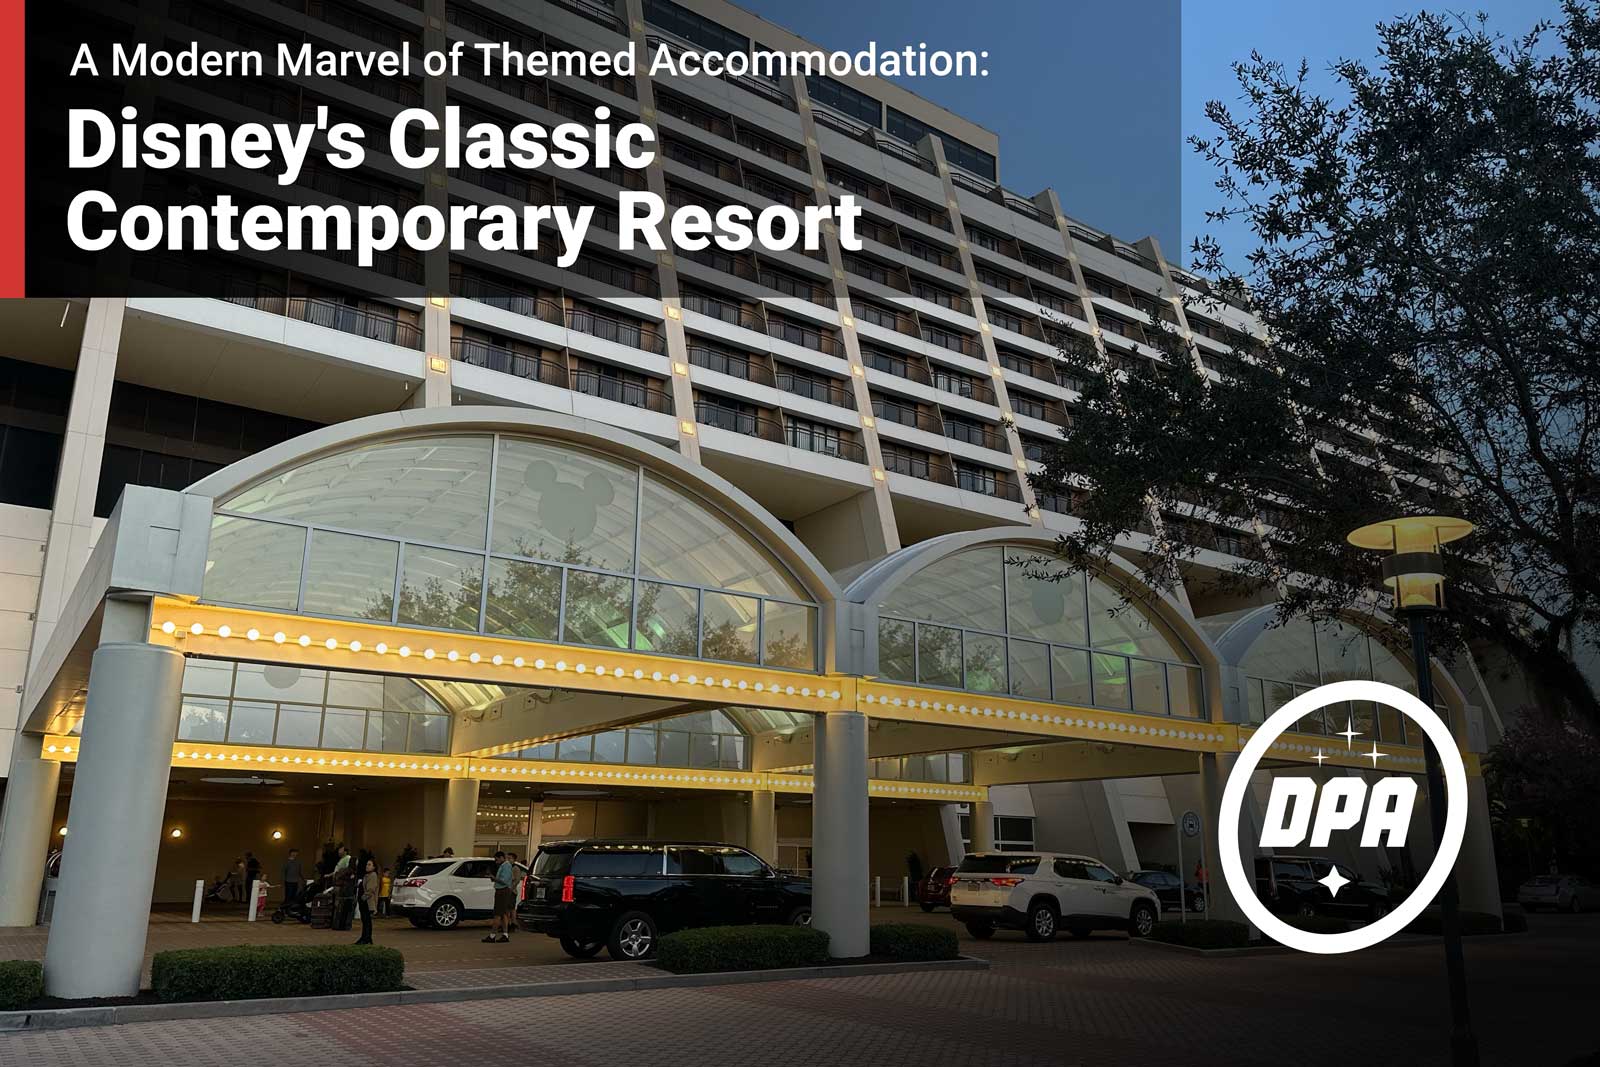 Disney's Contemporary Resort A Modern Marvel of Themed Accommodation